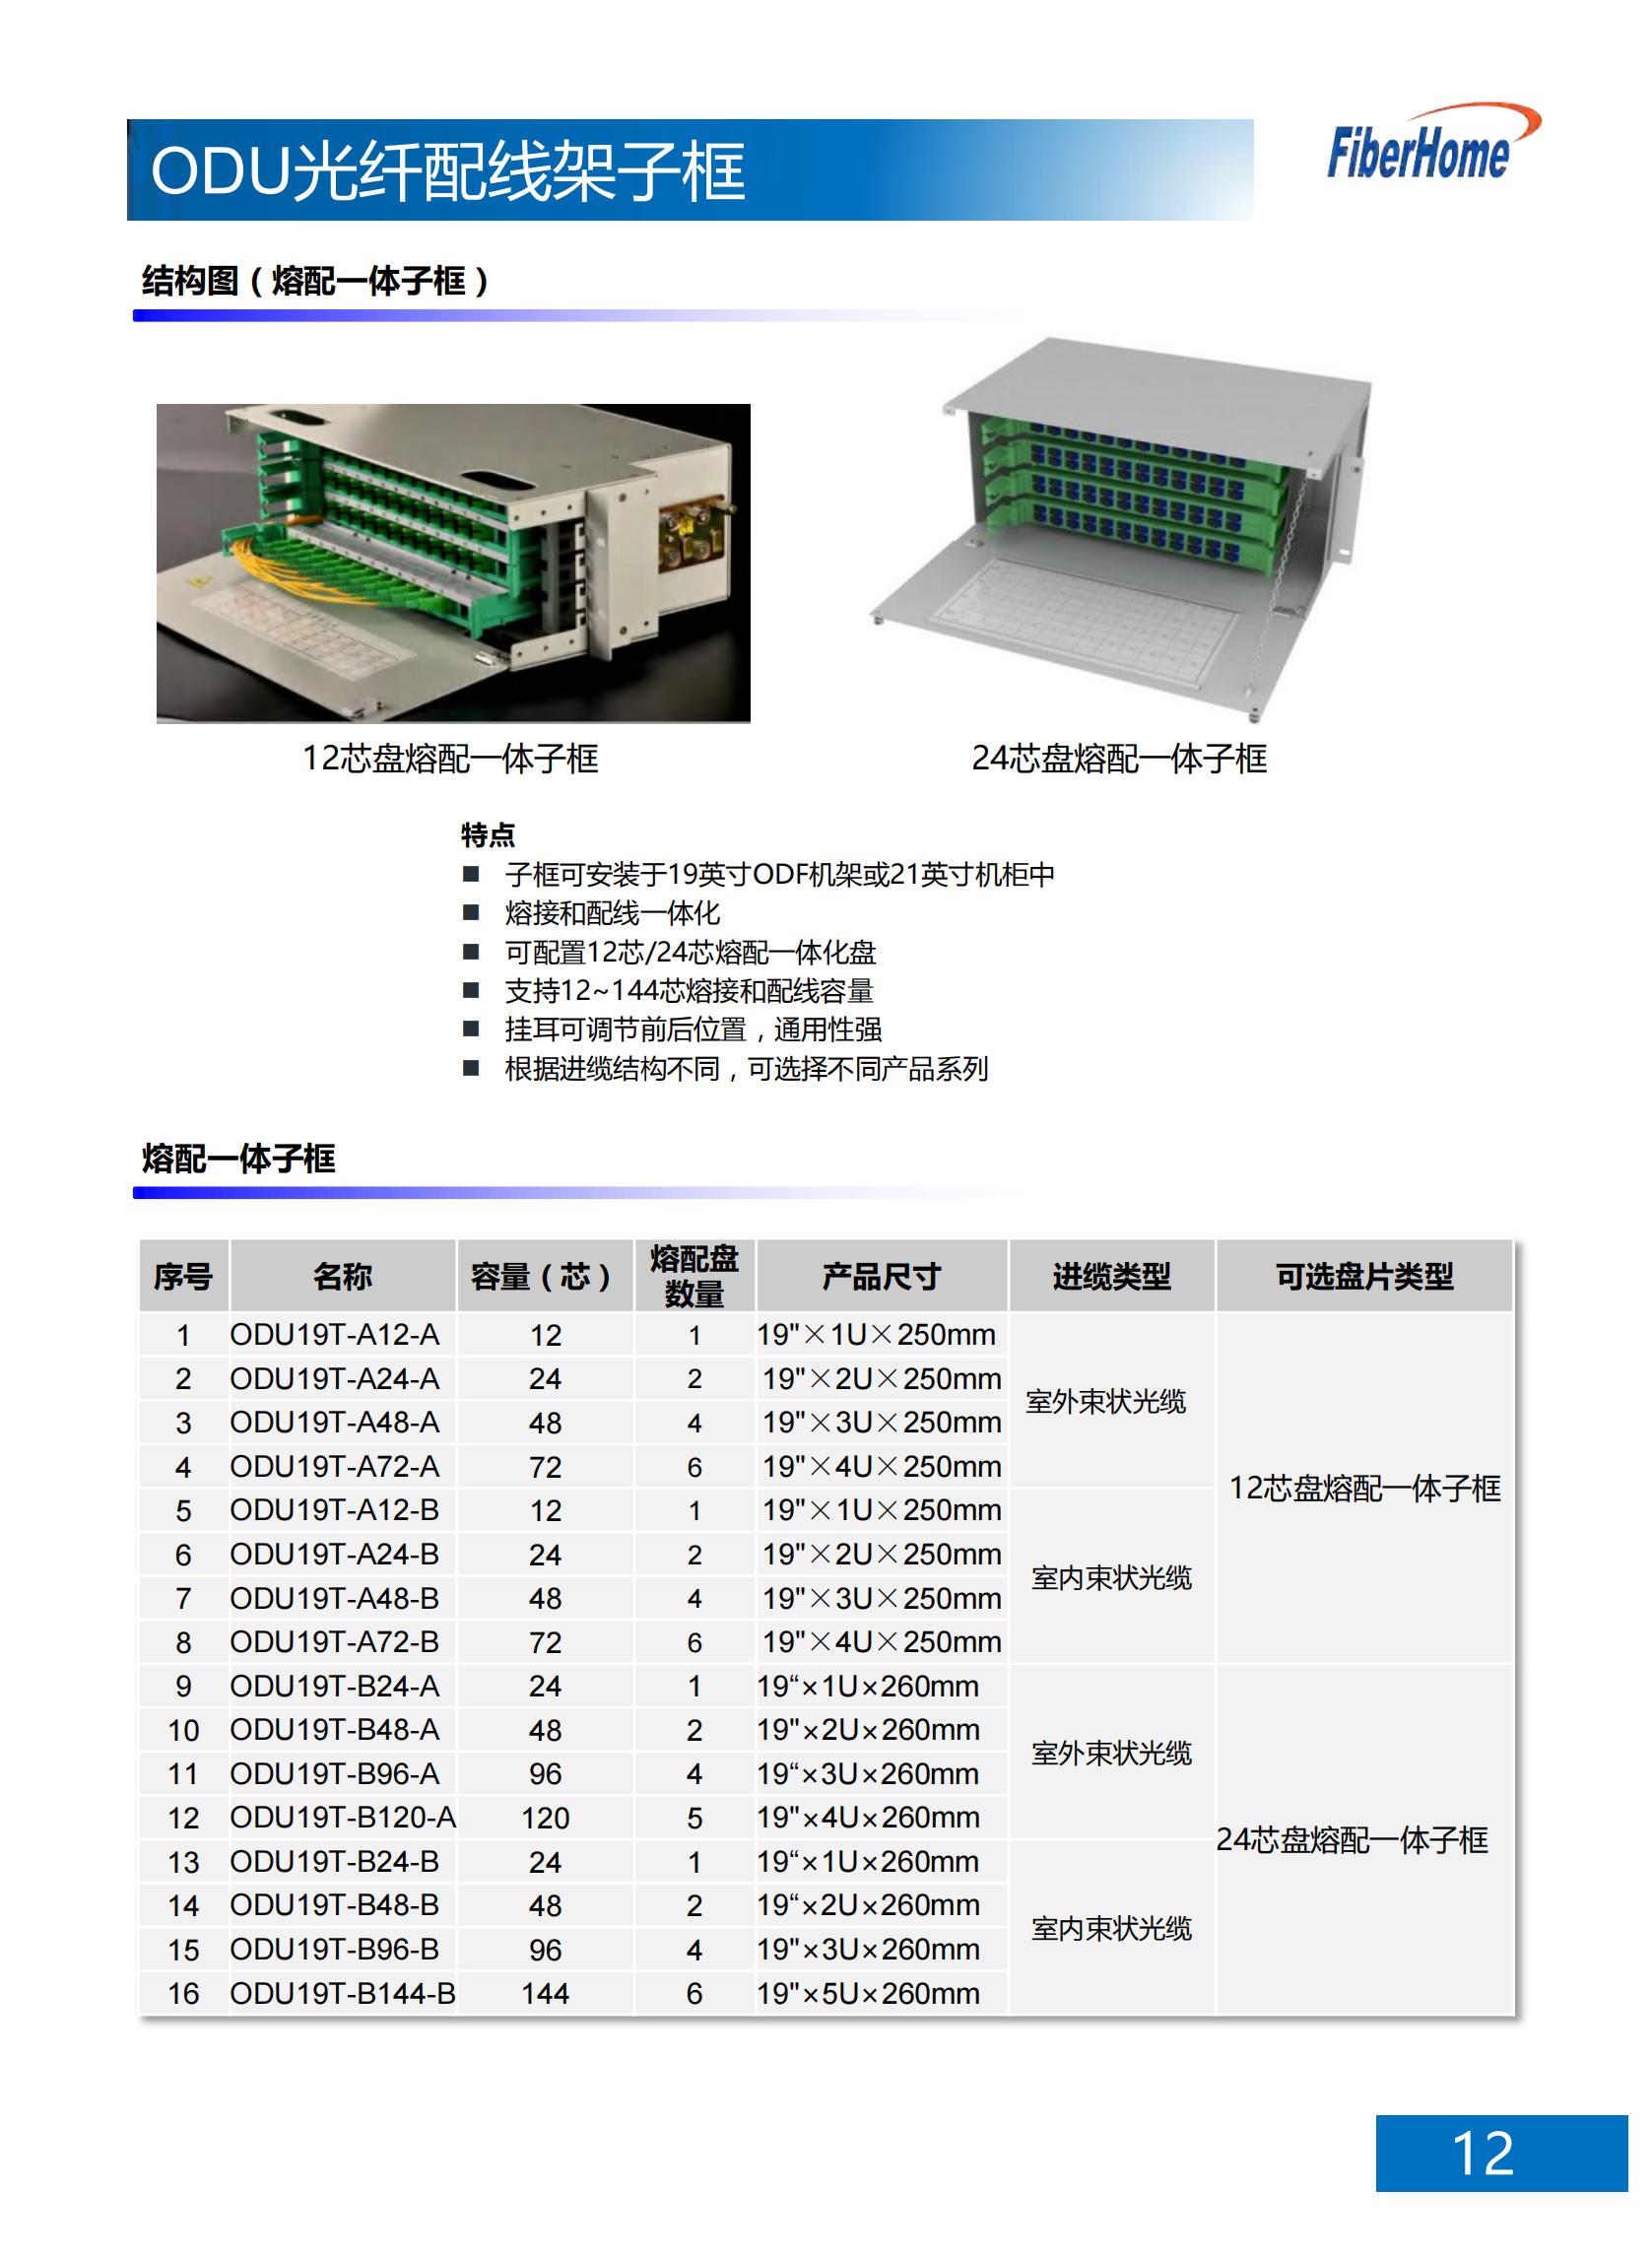 72-core ODU optical fiber distribution shelf frame ODU19T-A1272-A-FC (including 12-core FC fusion integration unit*6)